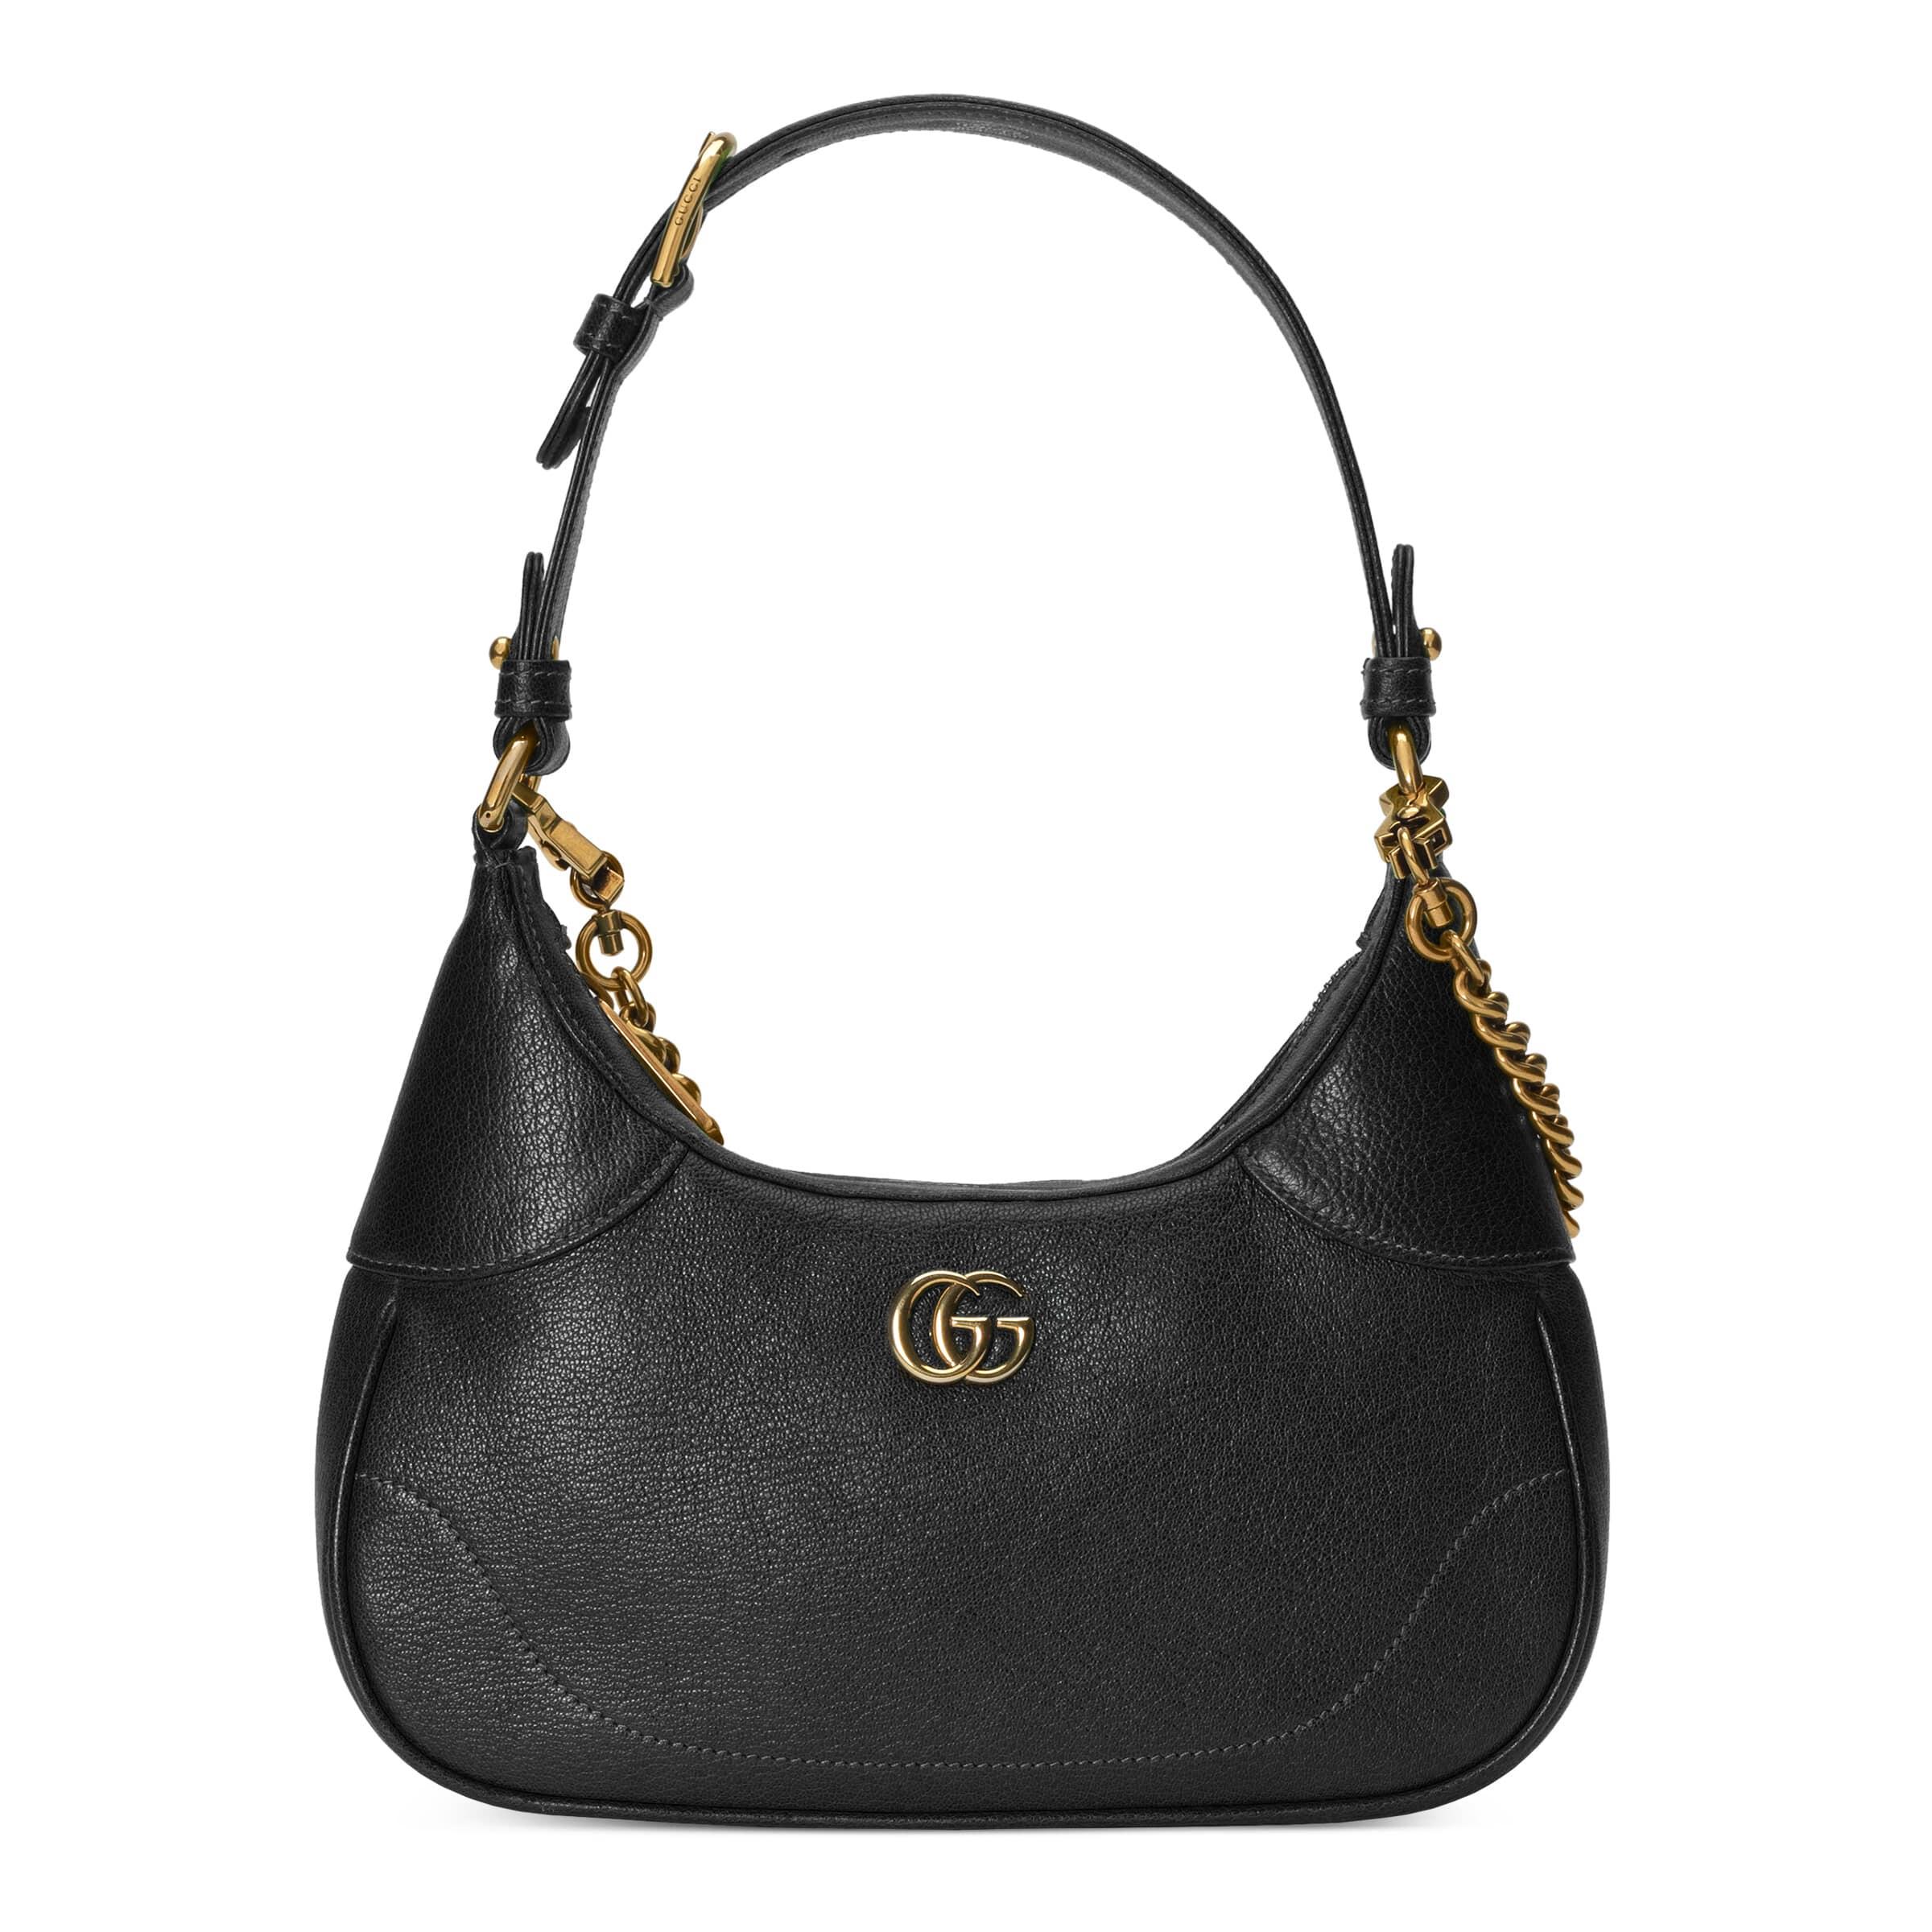 Gucci Aphrodite Small Shoulder Bag in Black